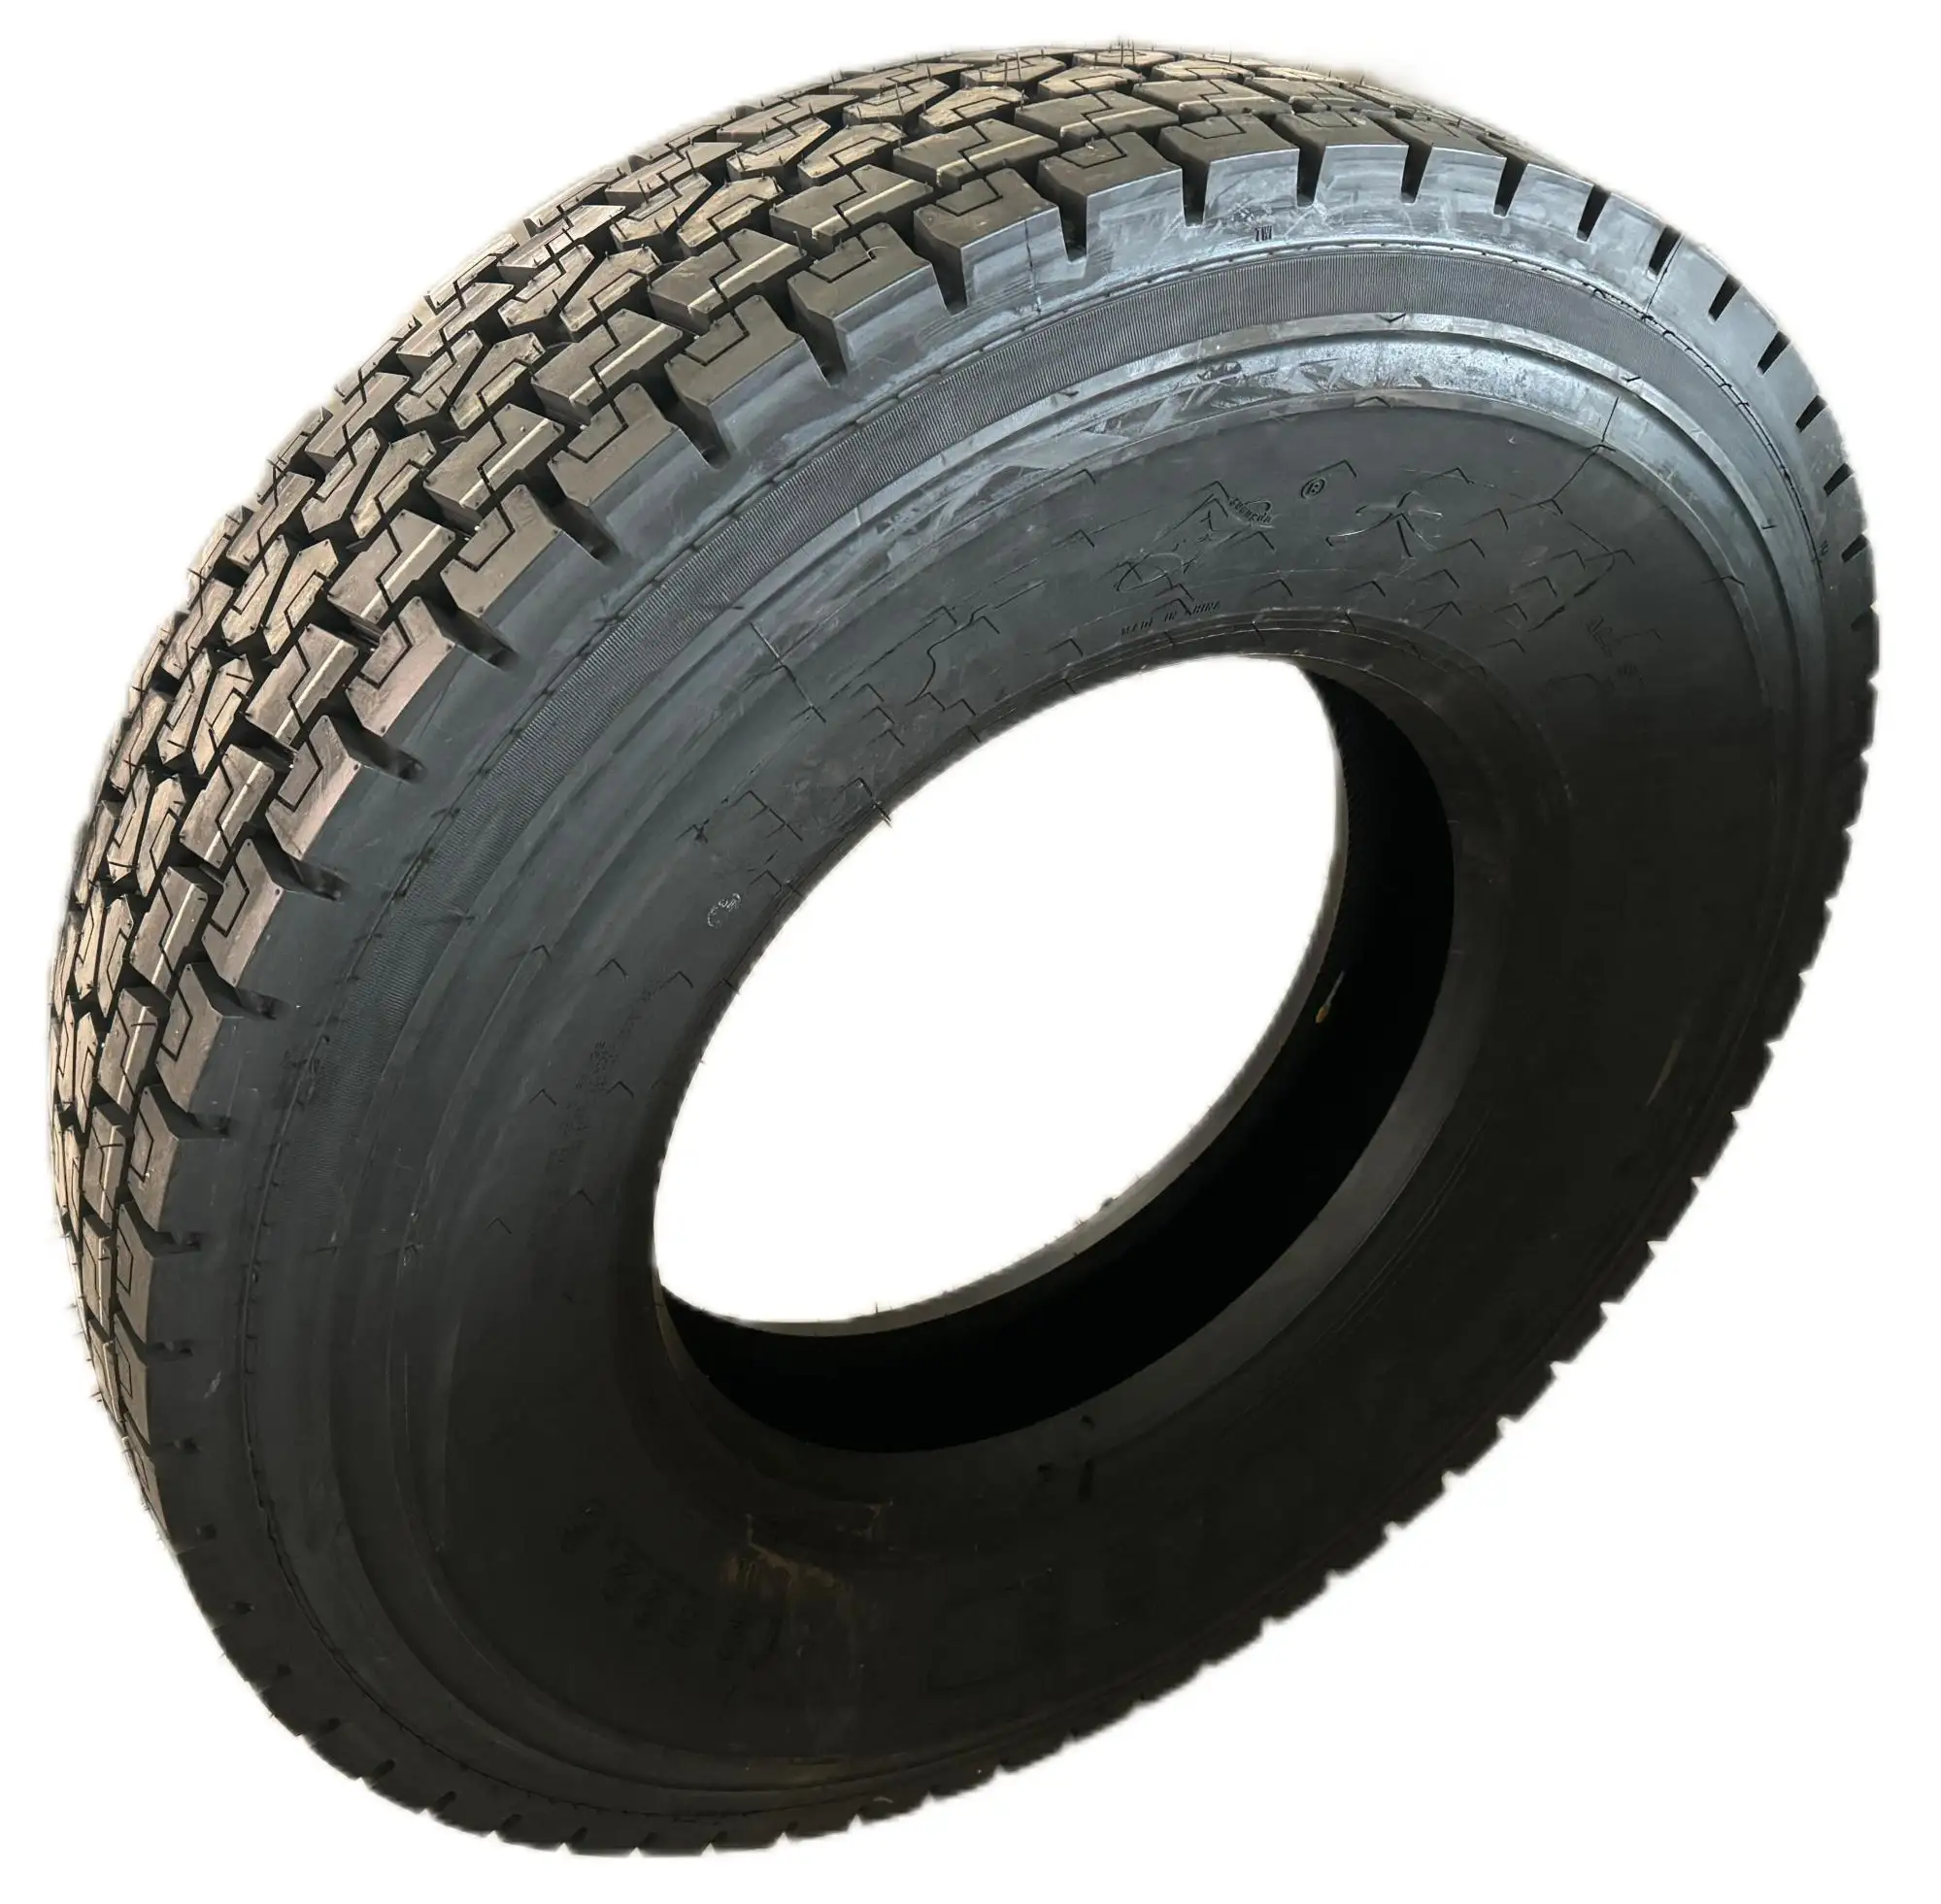 TBR Tyres Wholesale Heavy duty commercial truck tires 12R22.5 18PR for sale